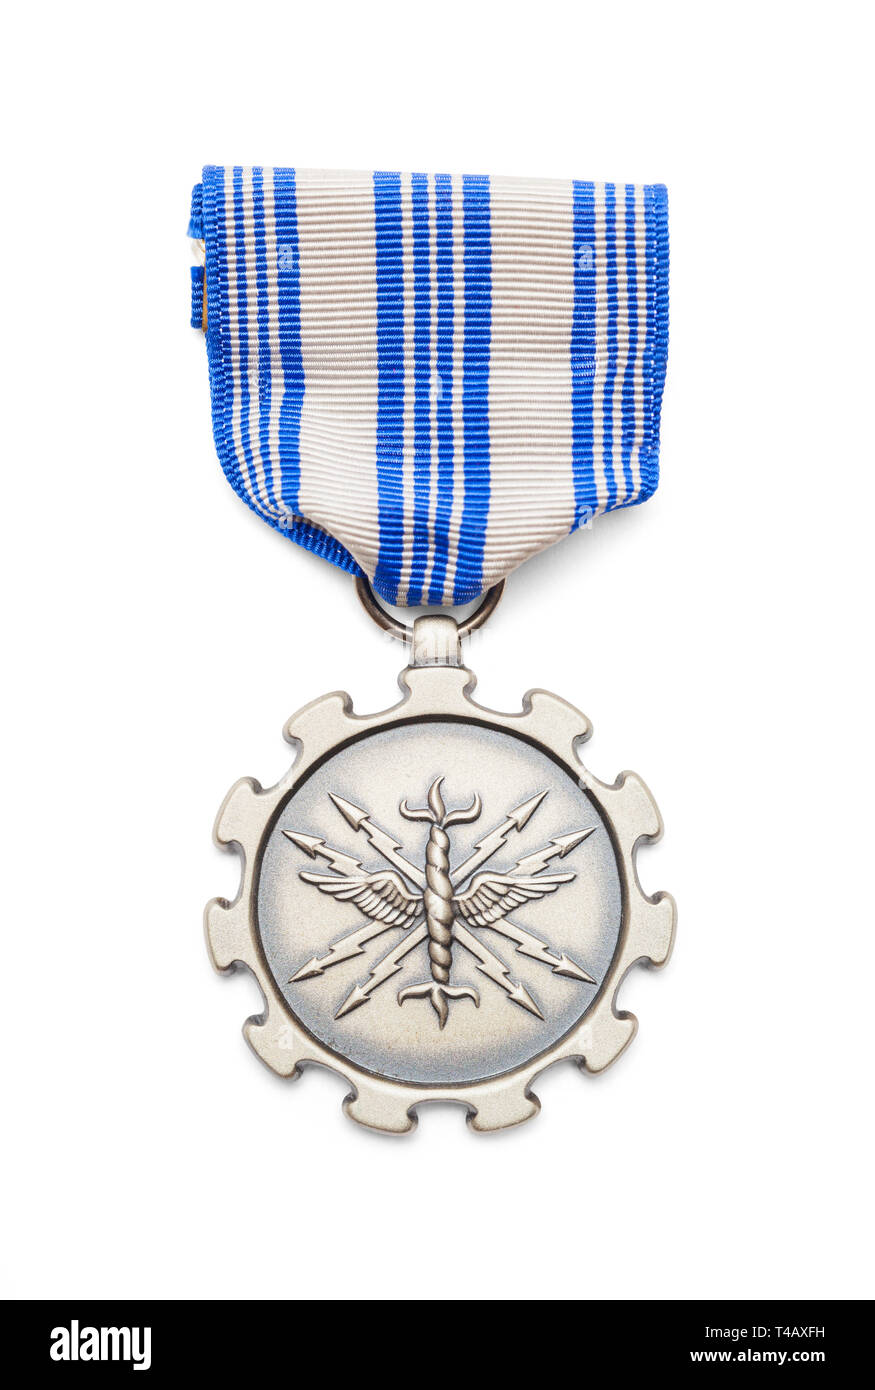 United States Air Force Achievement Medal Ritagliata su bianco. Foto Stock